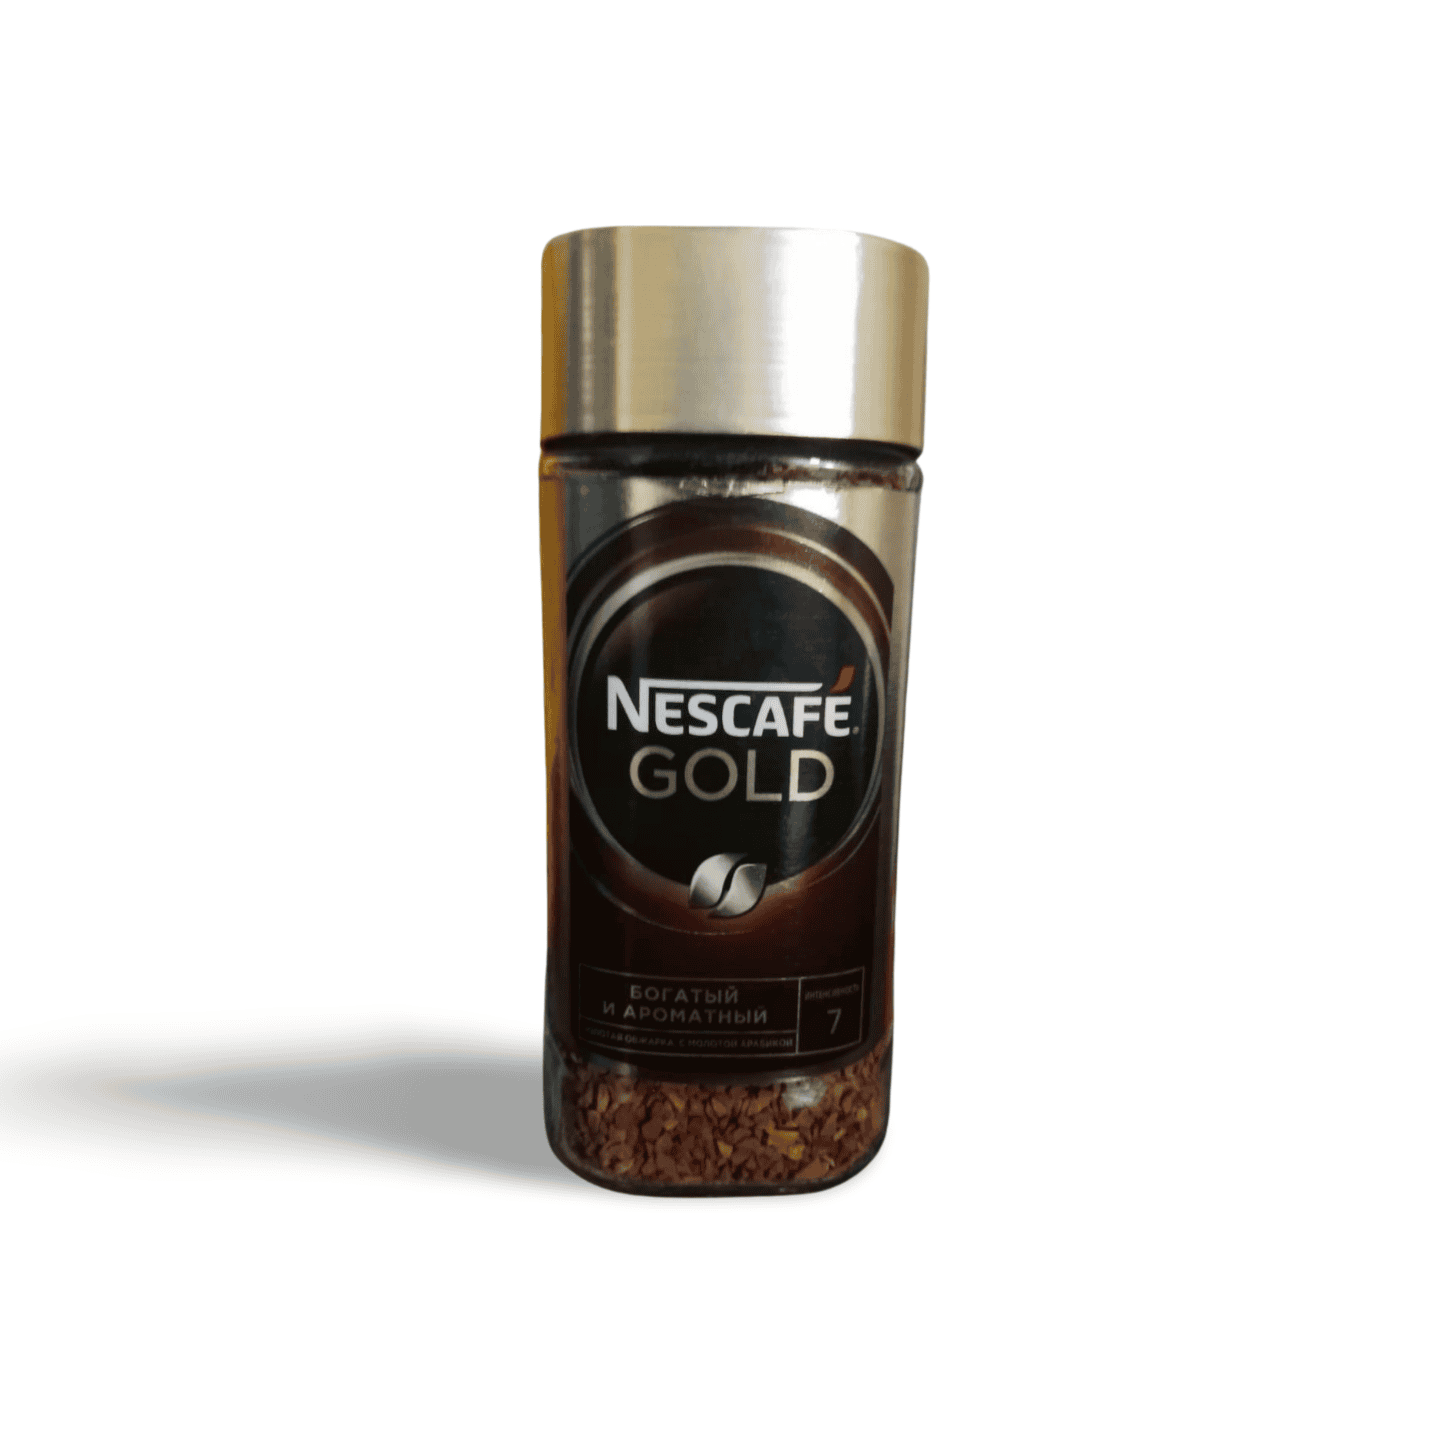 Nescafe Gold Price In Pakistan